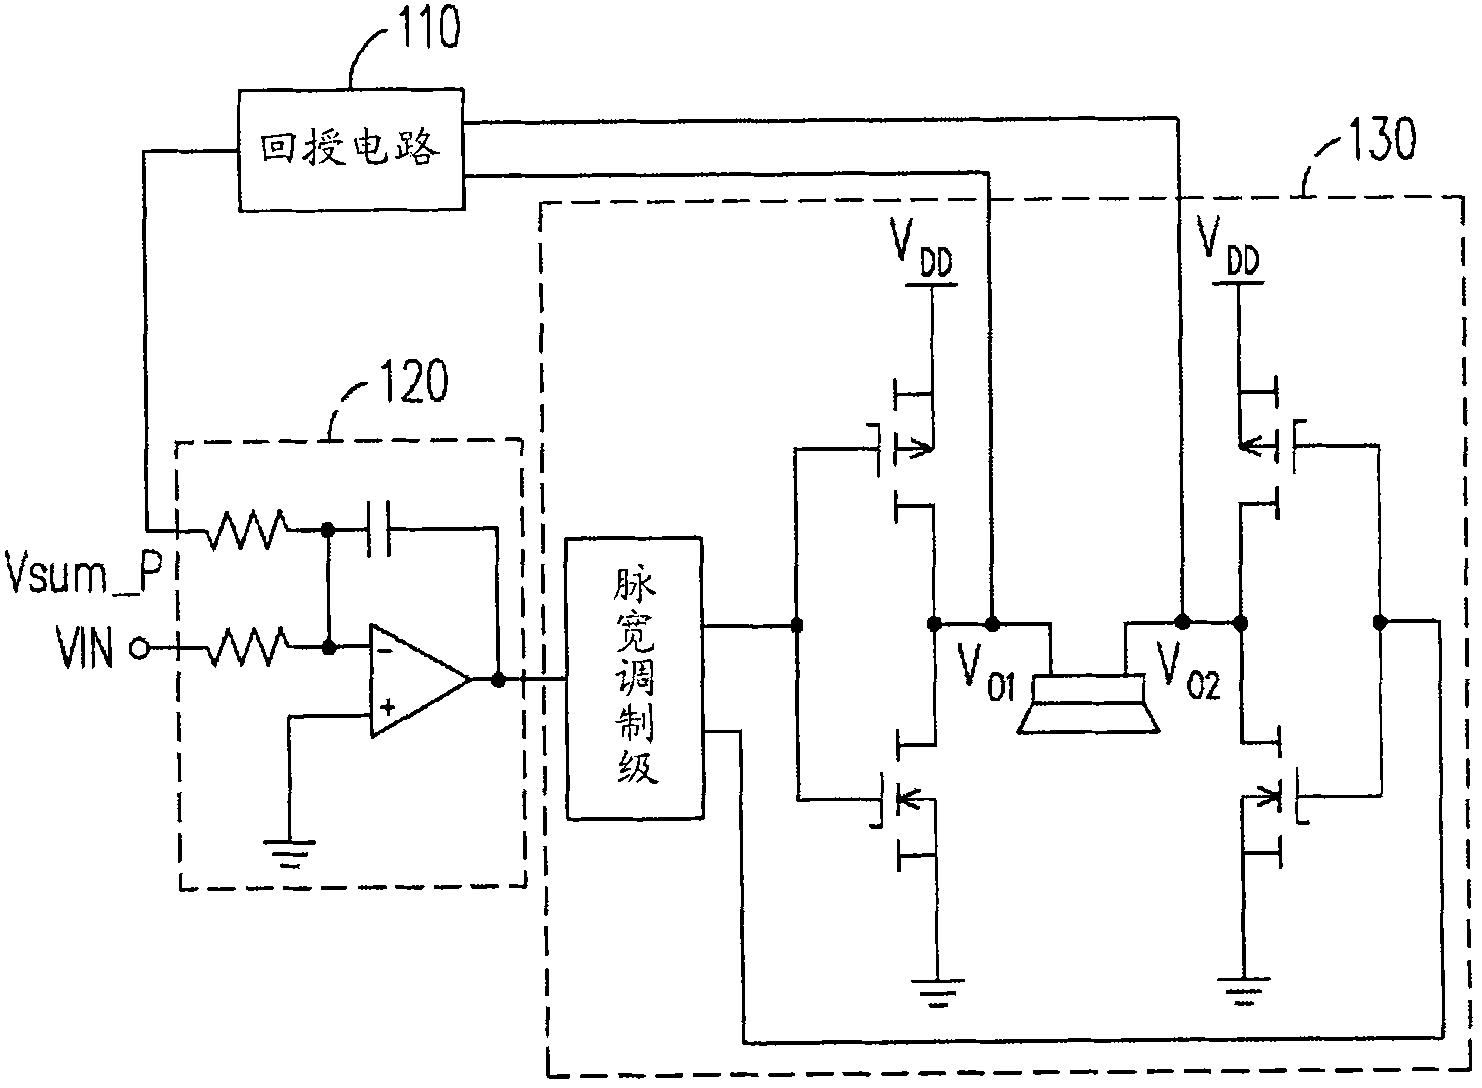 Power amplifier capable of regulating noise